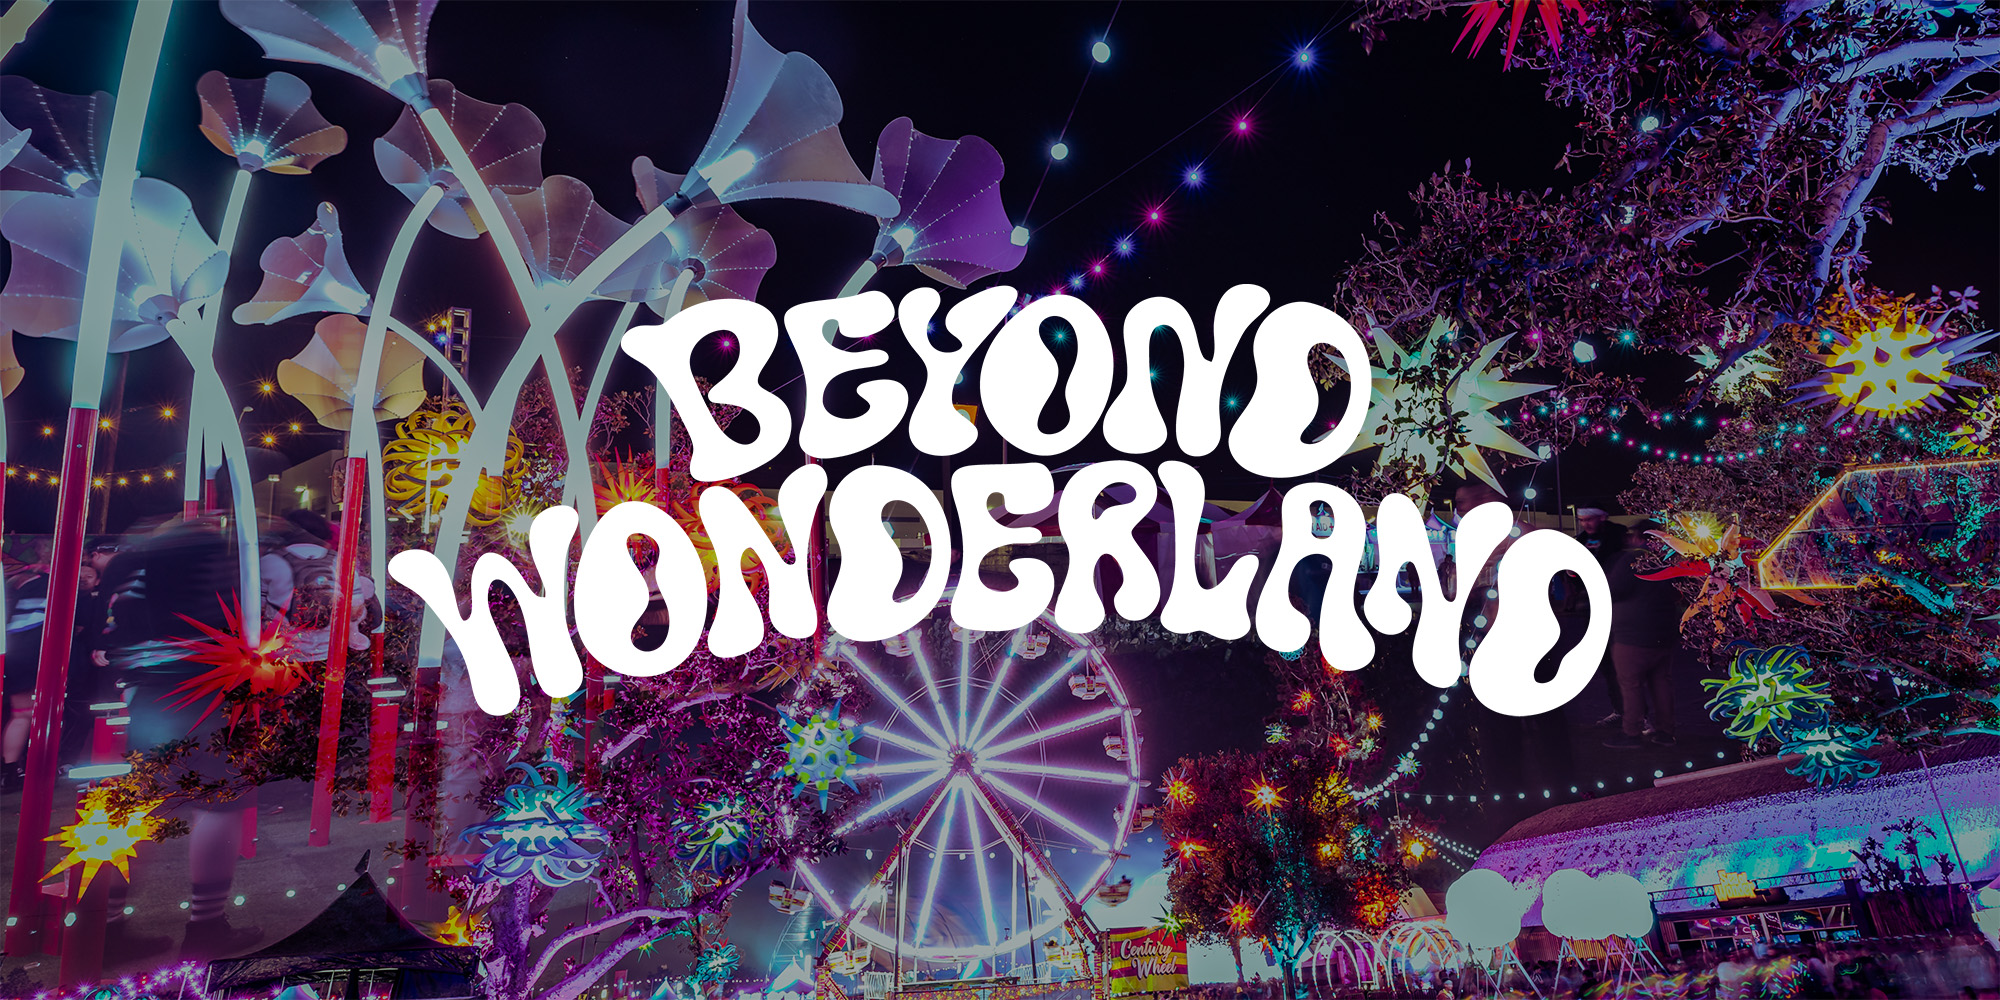 Beyond Wonderland music festival in San Bernardino is rescheduled